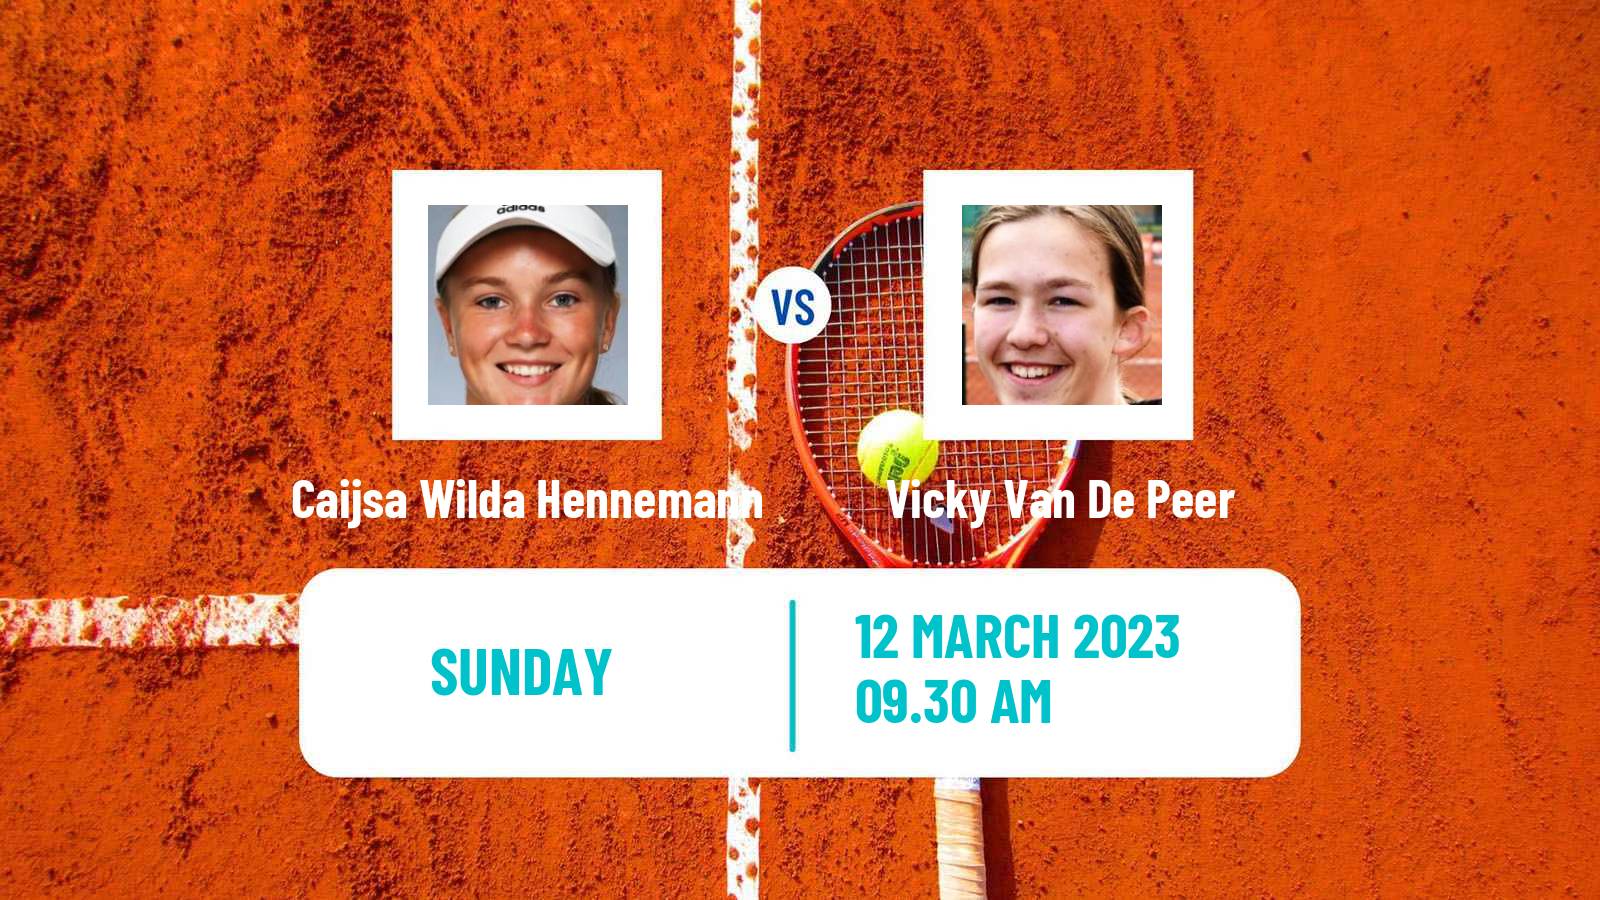 Tennis ITF Tournaments Caijsa Wilda Hennemann - Vicky Van De Peer